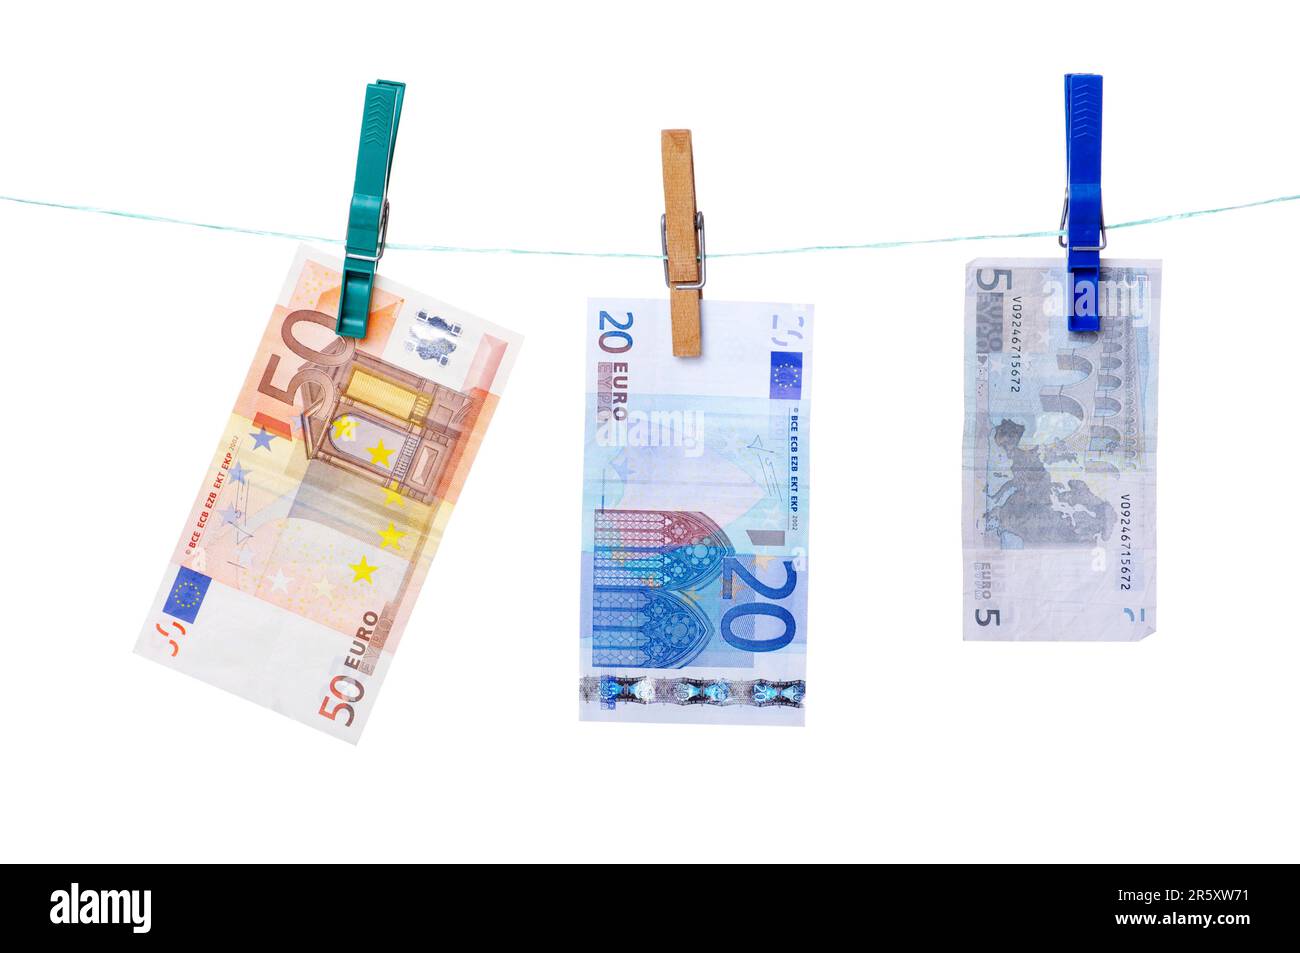 Euro notes to clothesline, banknotes, clothespin, clothespins Stock Photo